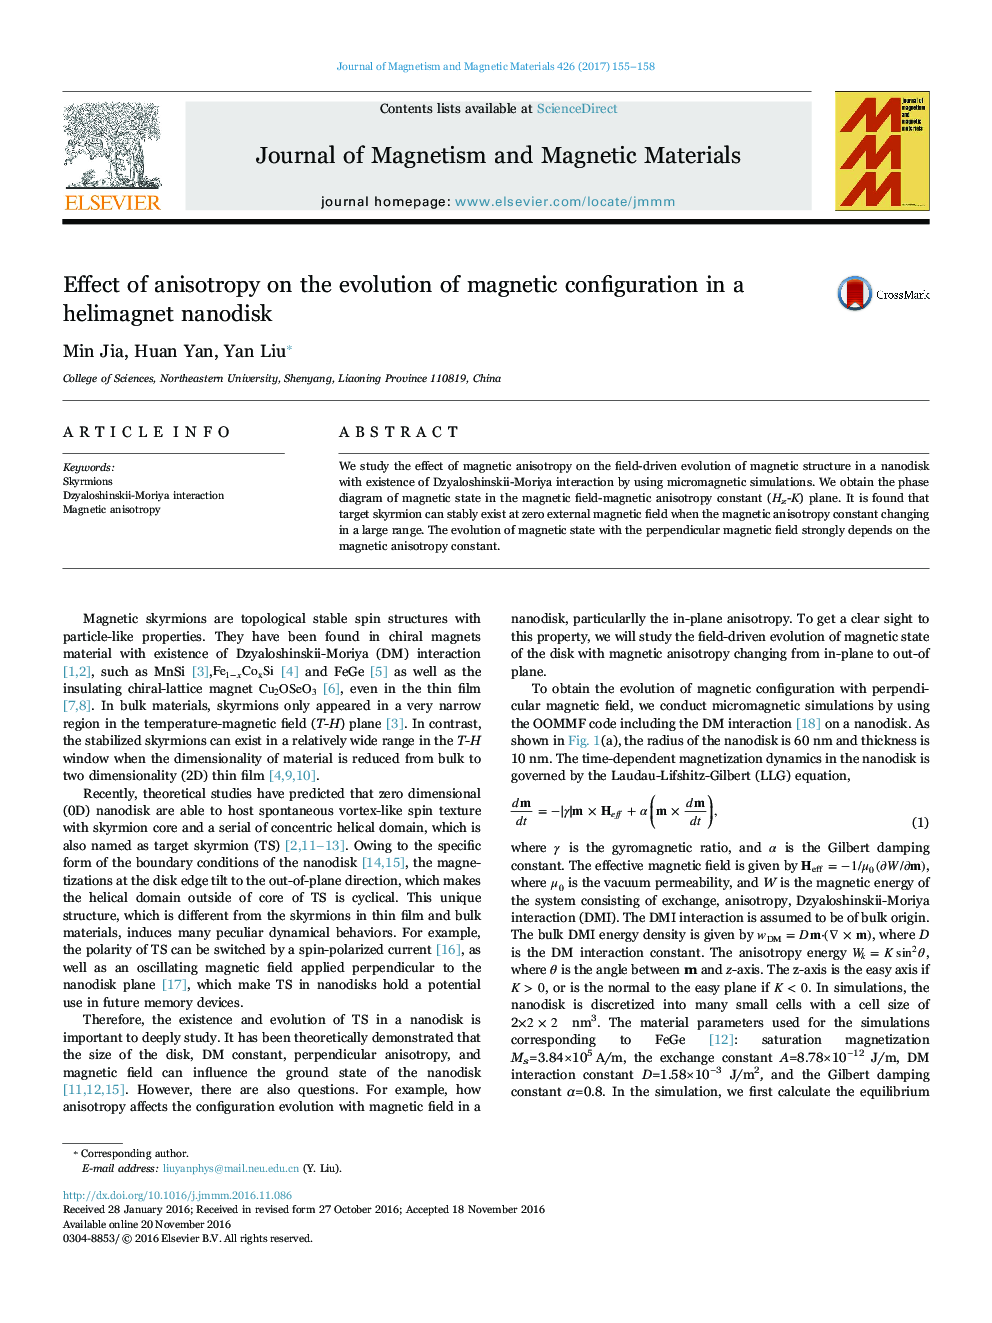 Effect of anisotropy on the evolution of magnetic configuration in a helimagnet nanodisk